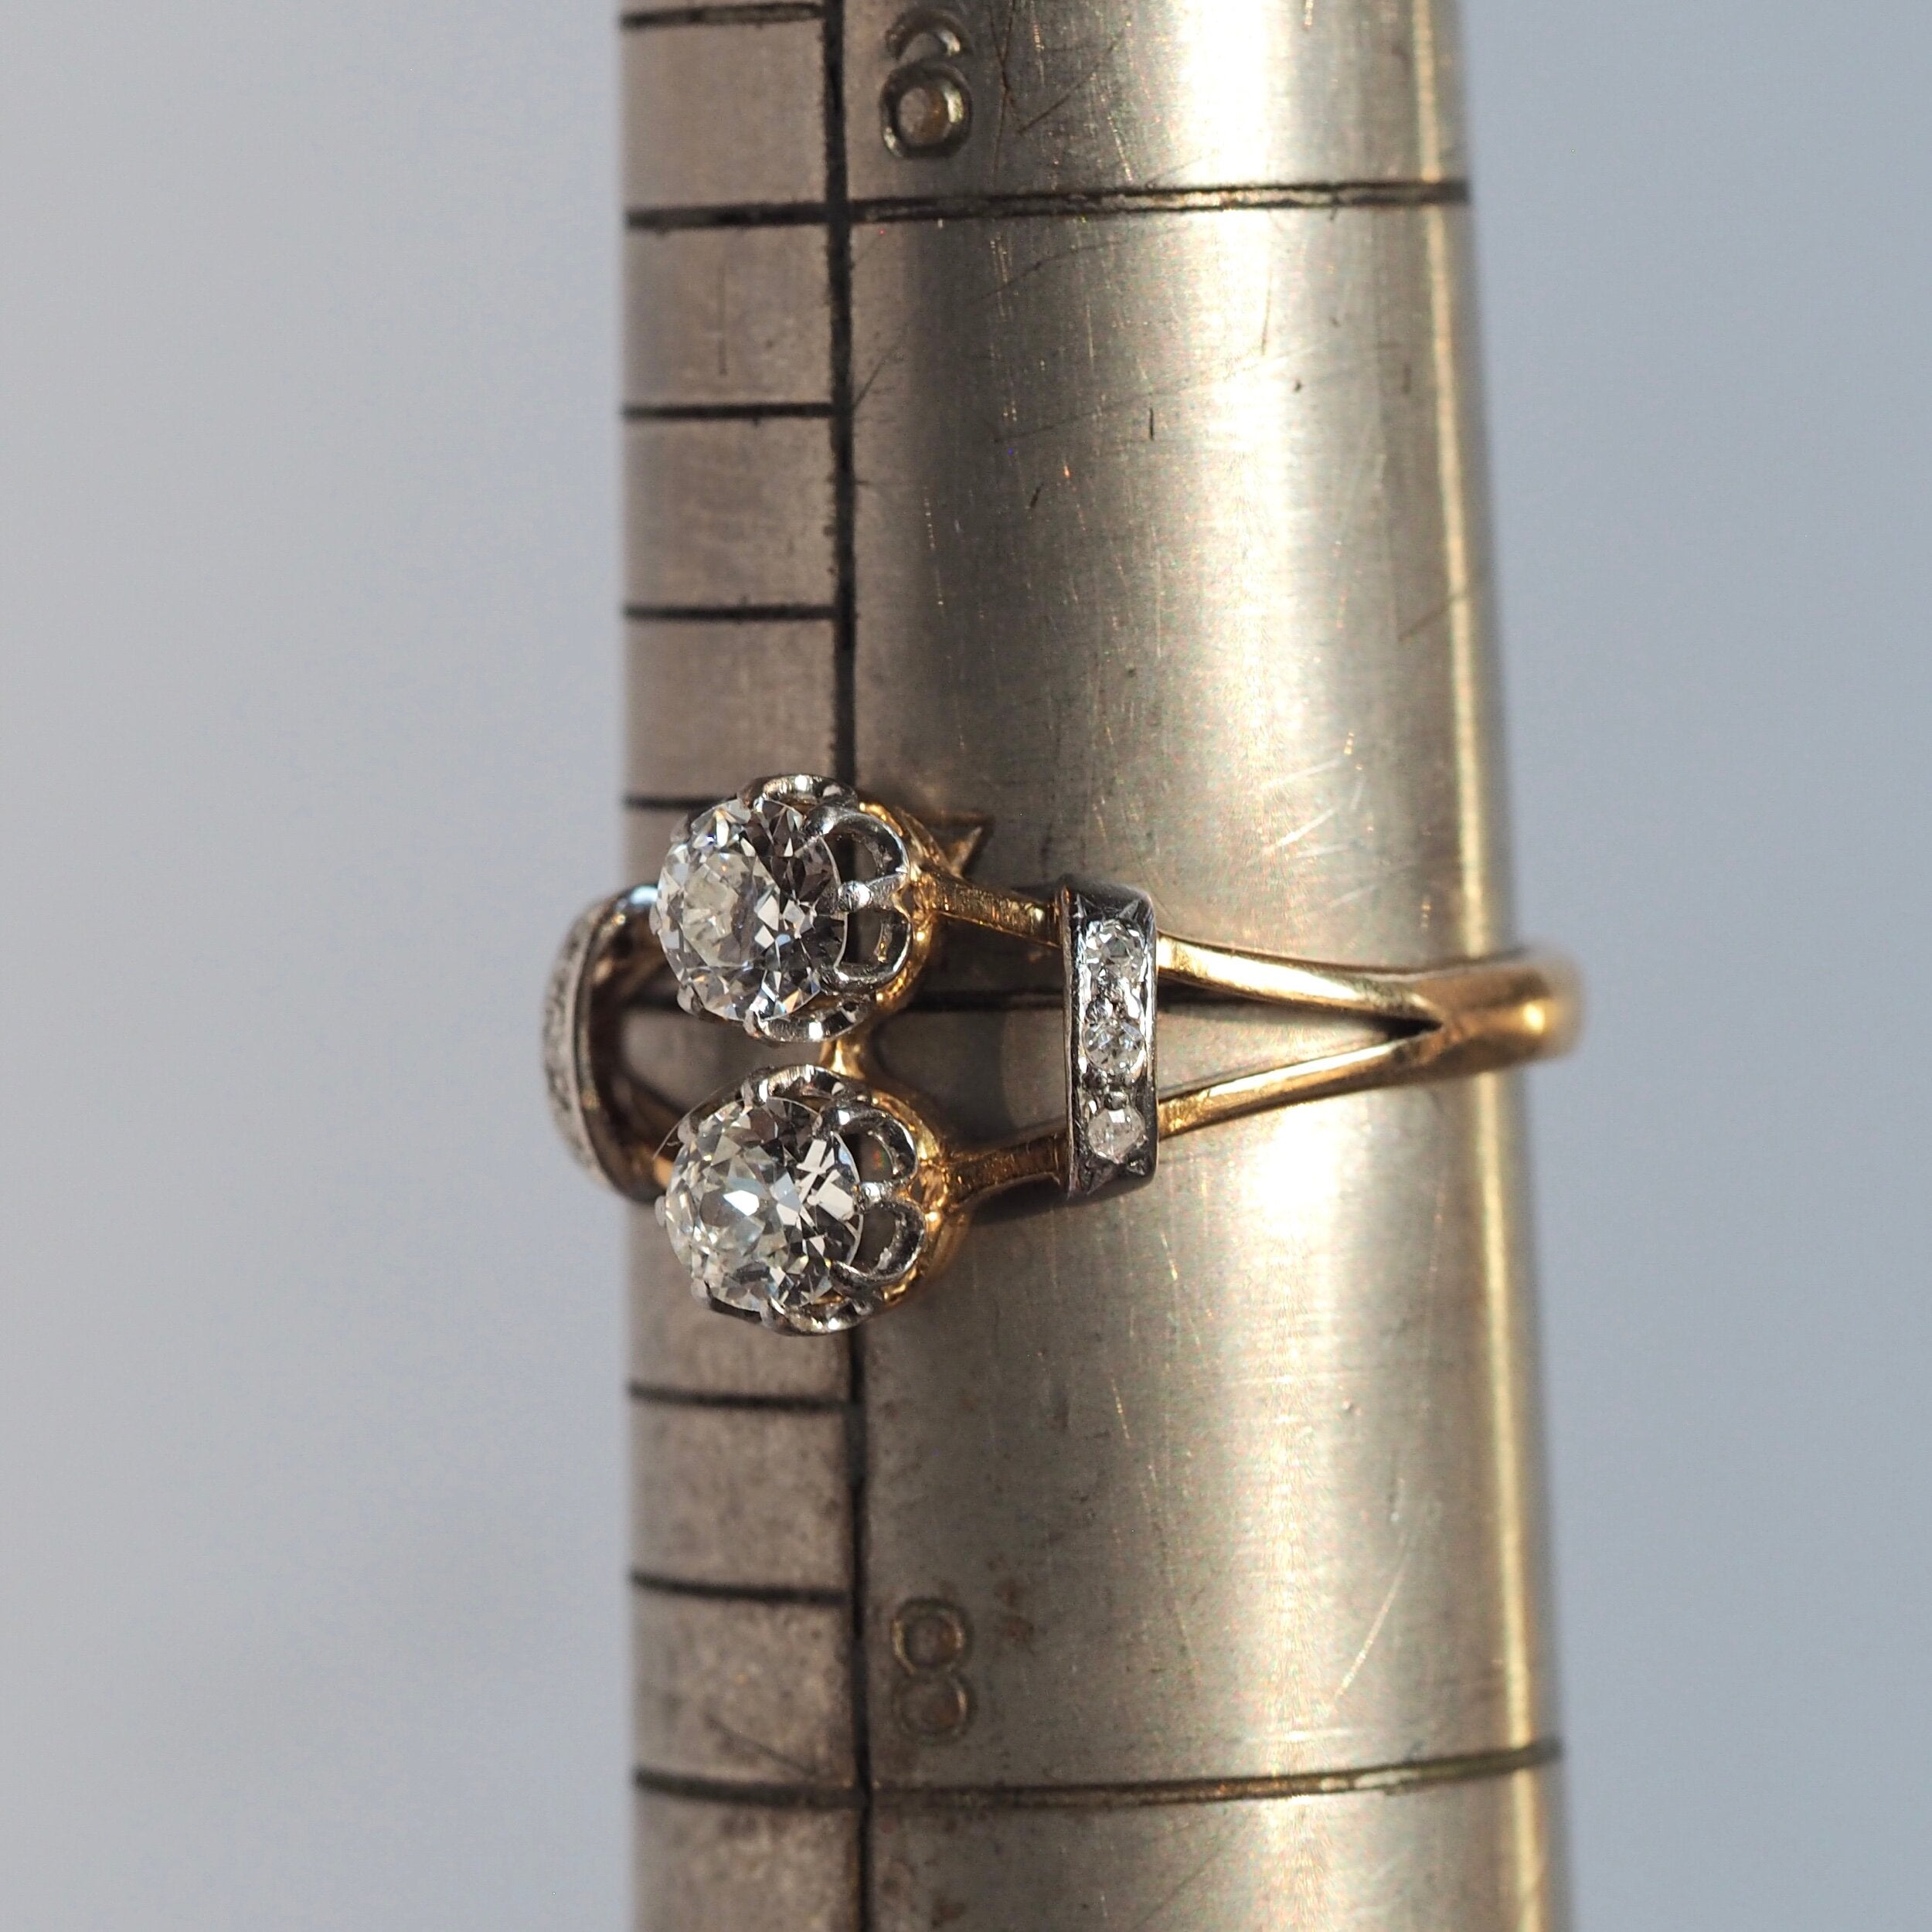 Antique 18k Gold French Art Nouveau Moi et Toi Diamond Ring